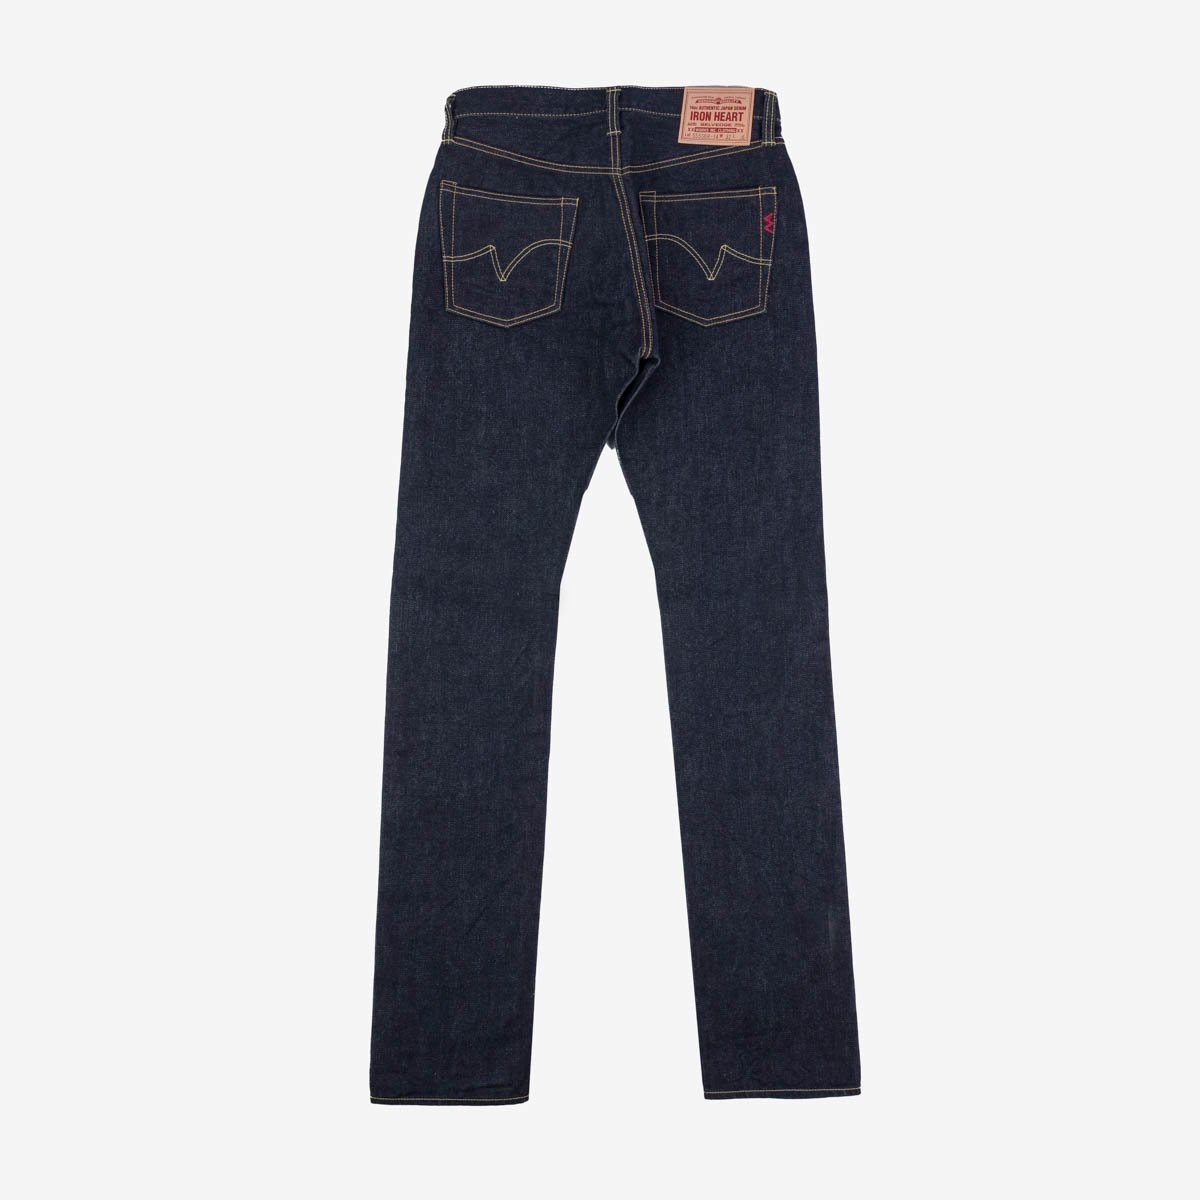 IH-555SBR-14 14oz Broken Twill Selvedge Denim Super Slim Cut Jeans - Indigo - 5